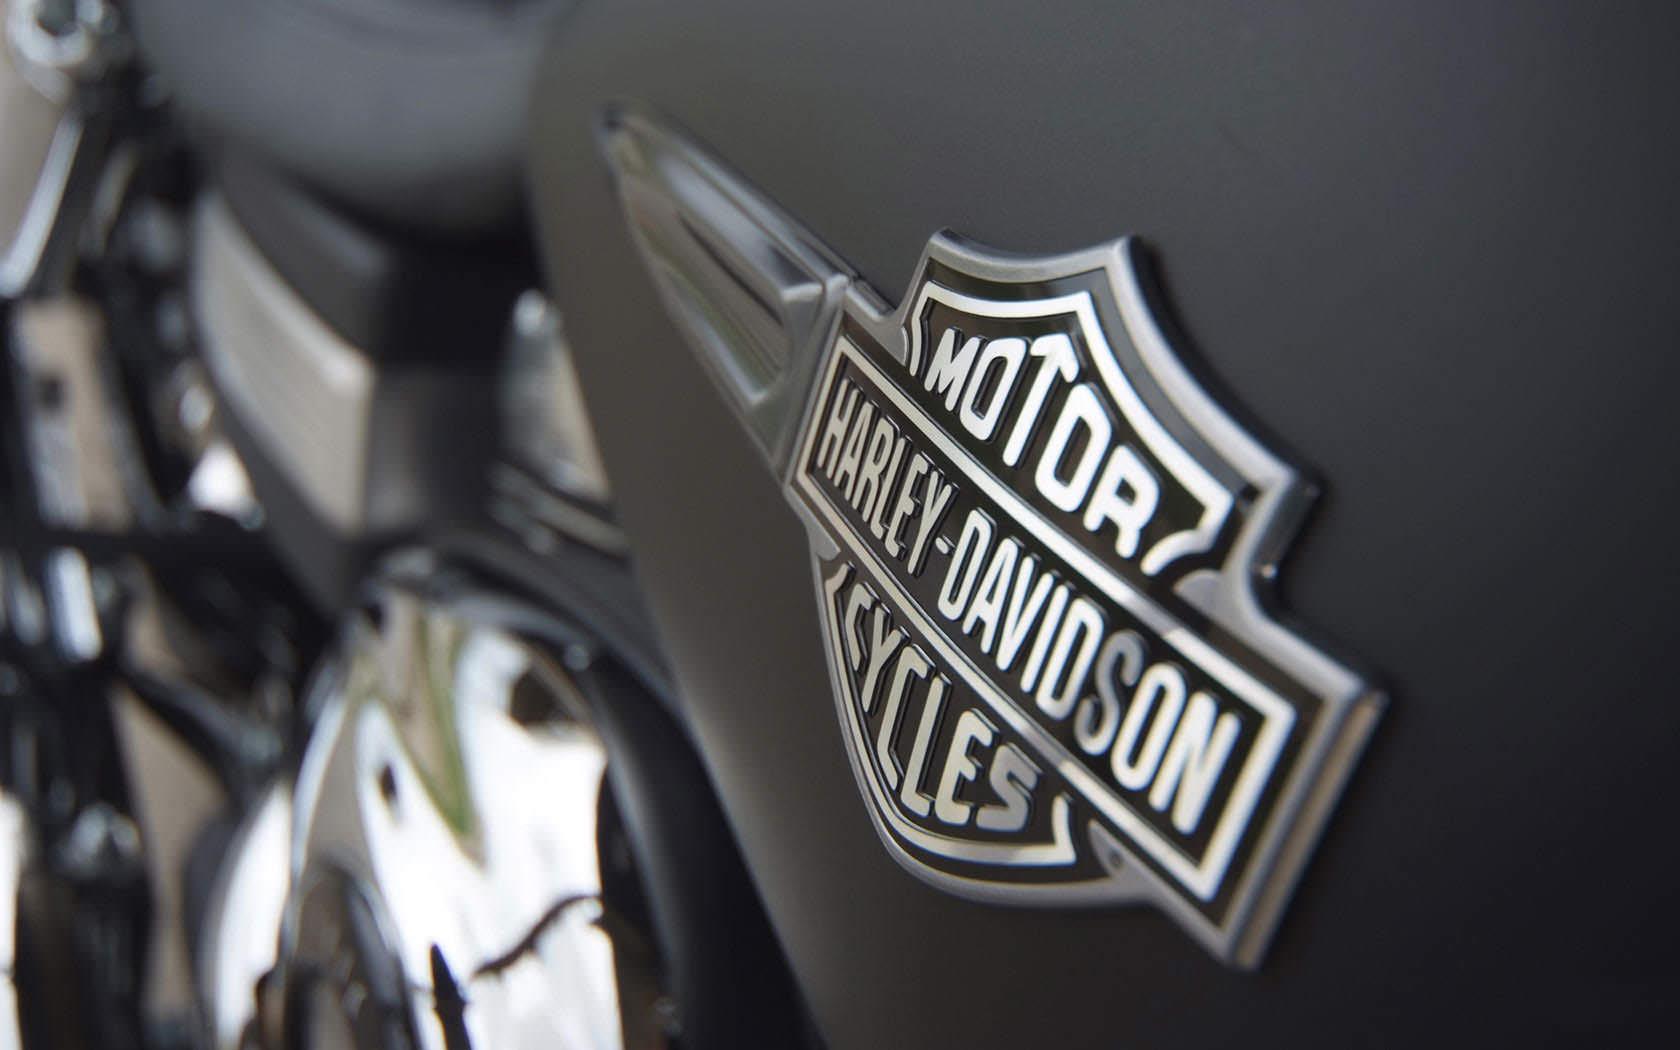 Harley Davidson Is Big Motor Wallpaper HD 701 Wallpaper